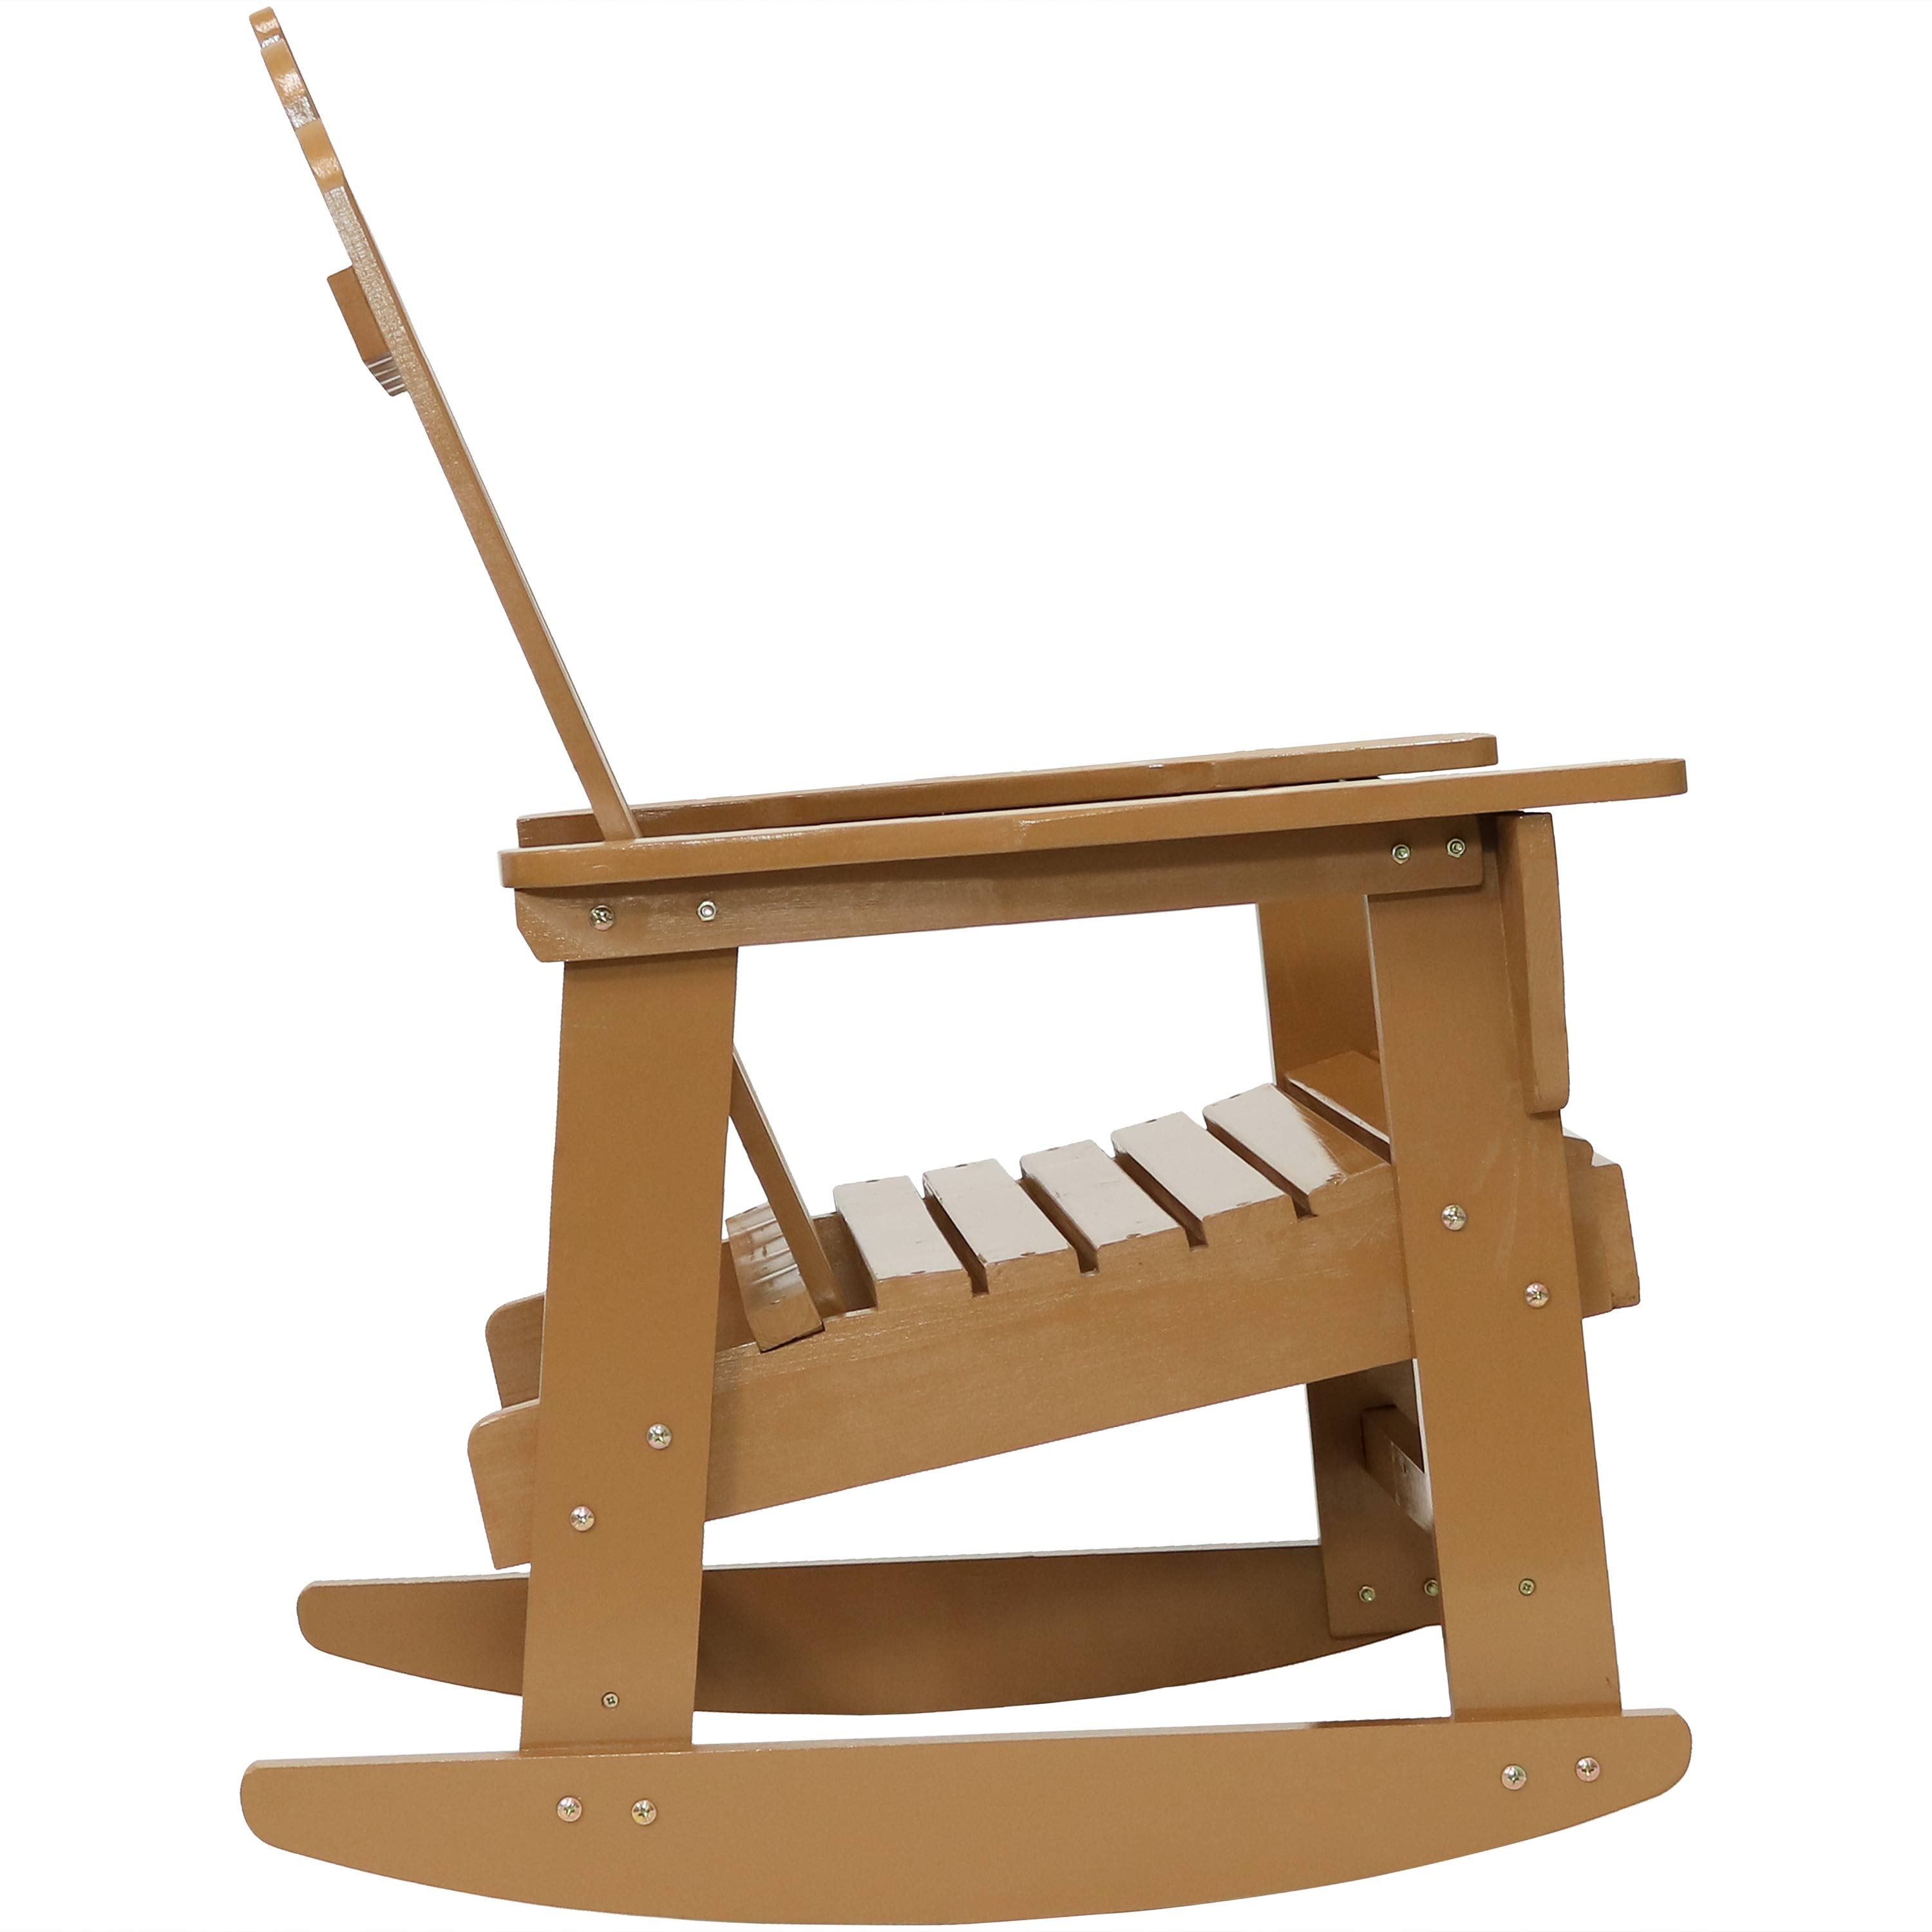 250-Pound Capacity Sunnydaze Classic Wooden Adirondack Rocking Chair with Cedar Finish